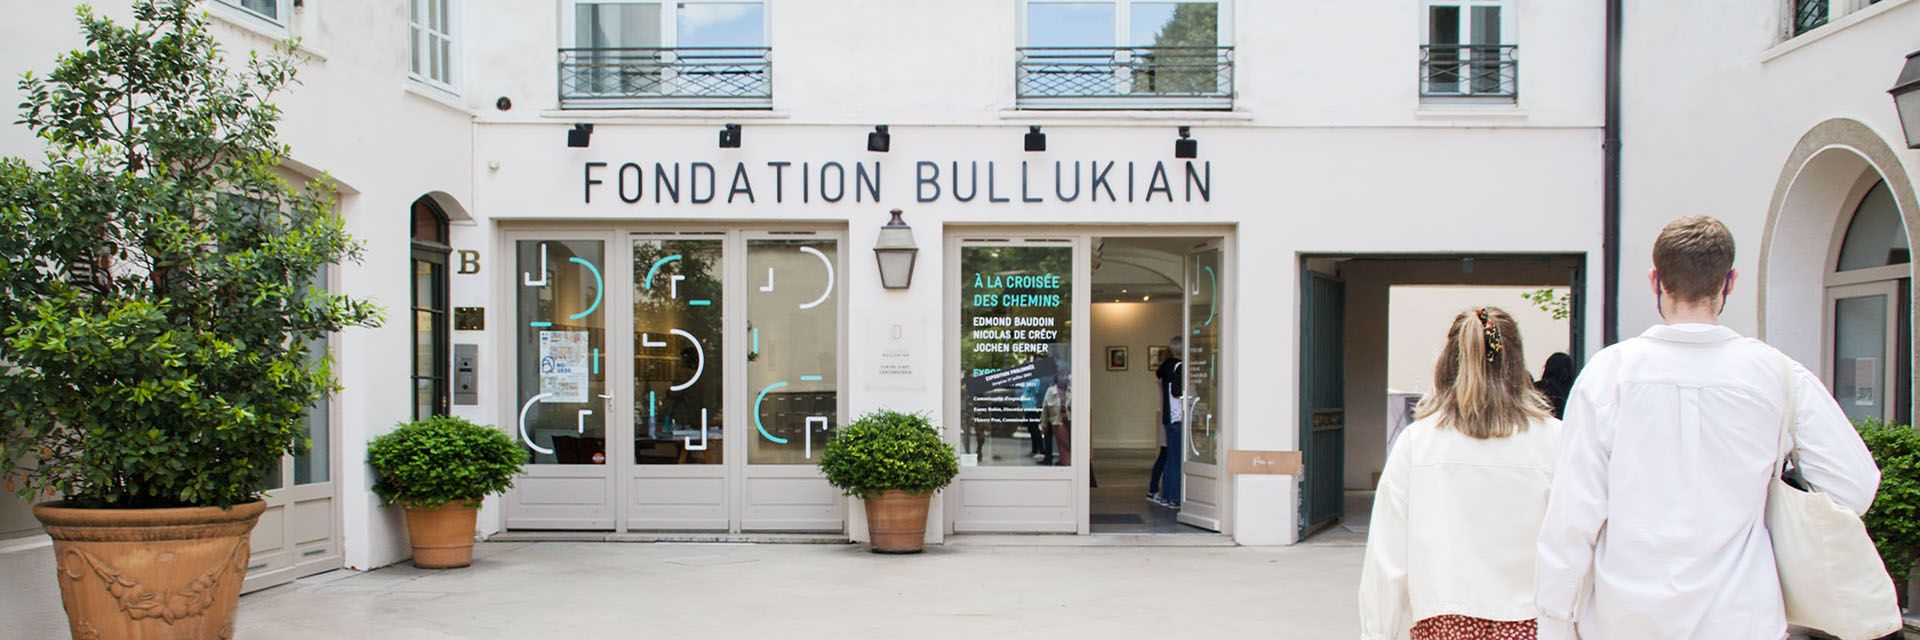 Bullukian-Stiftung